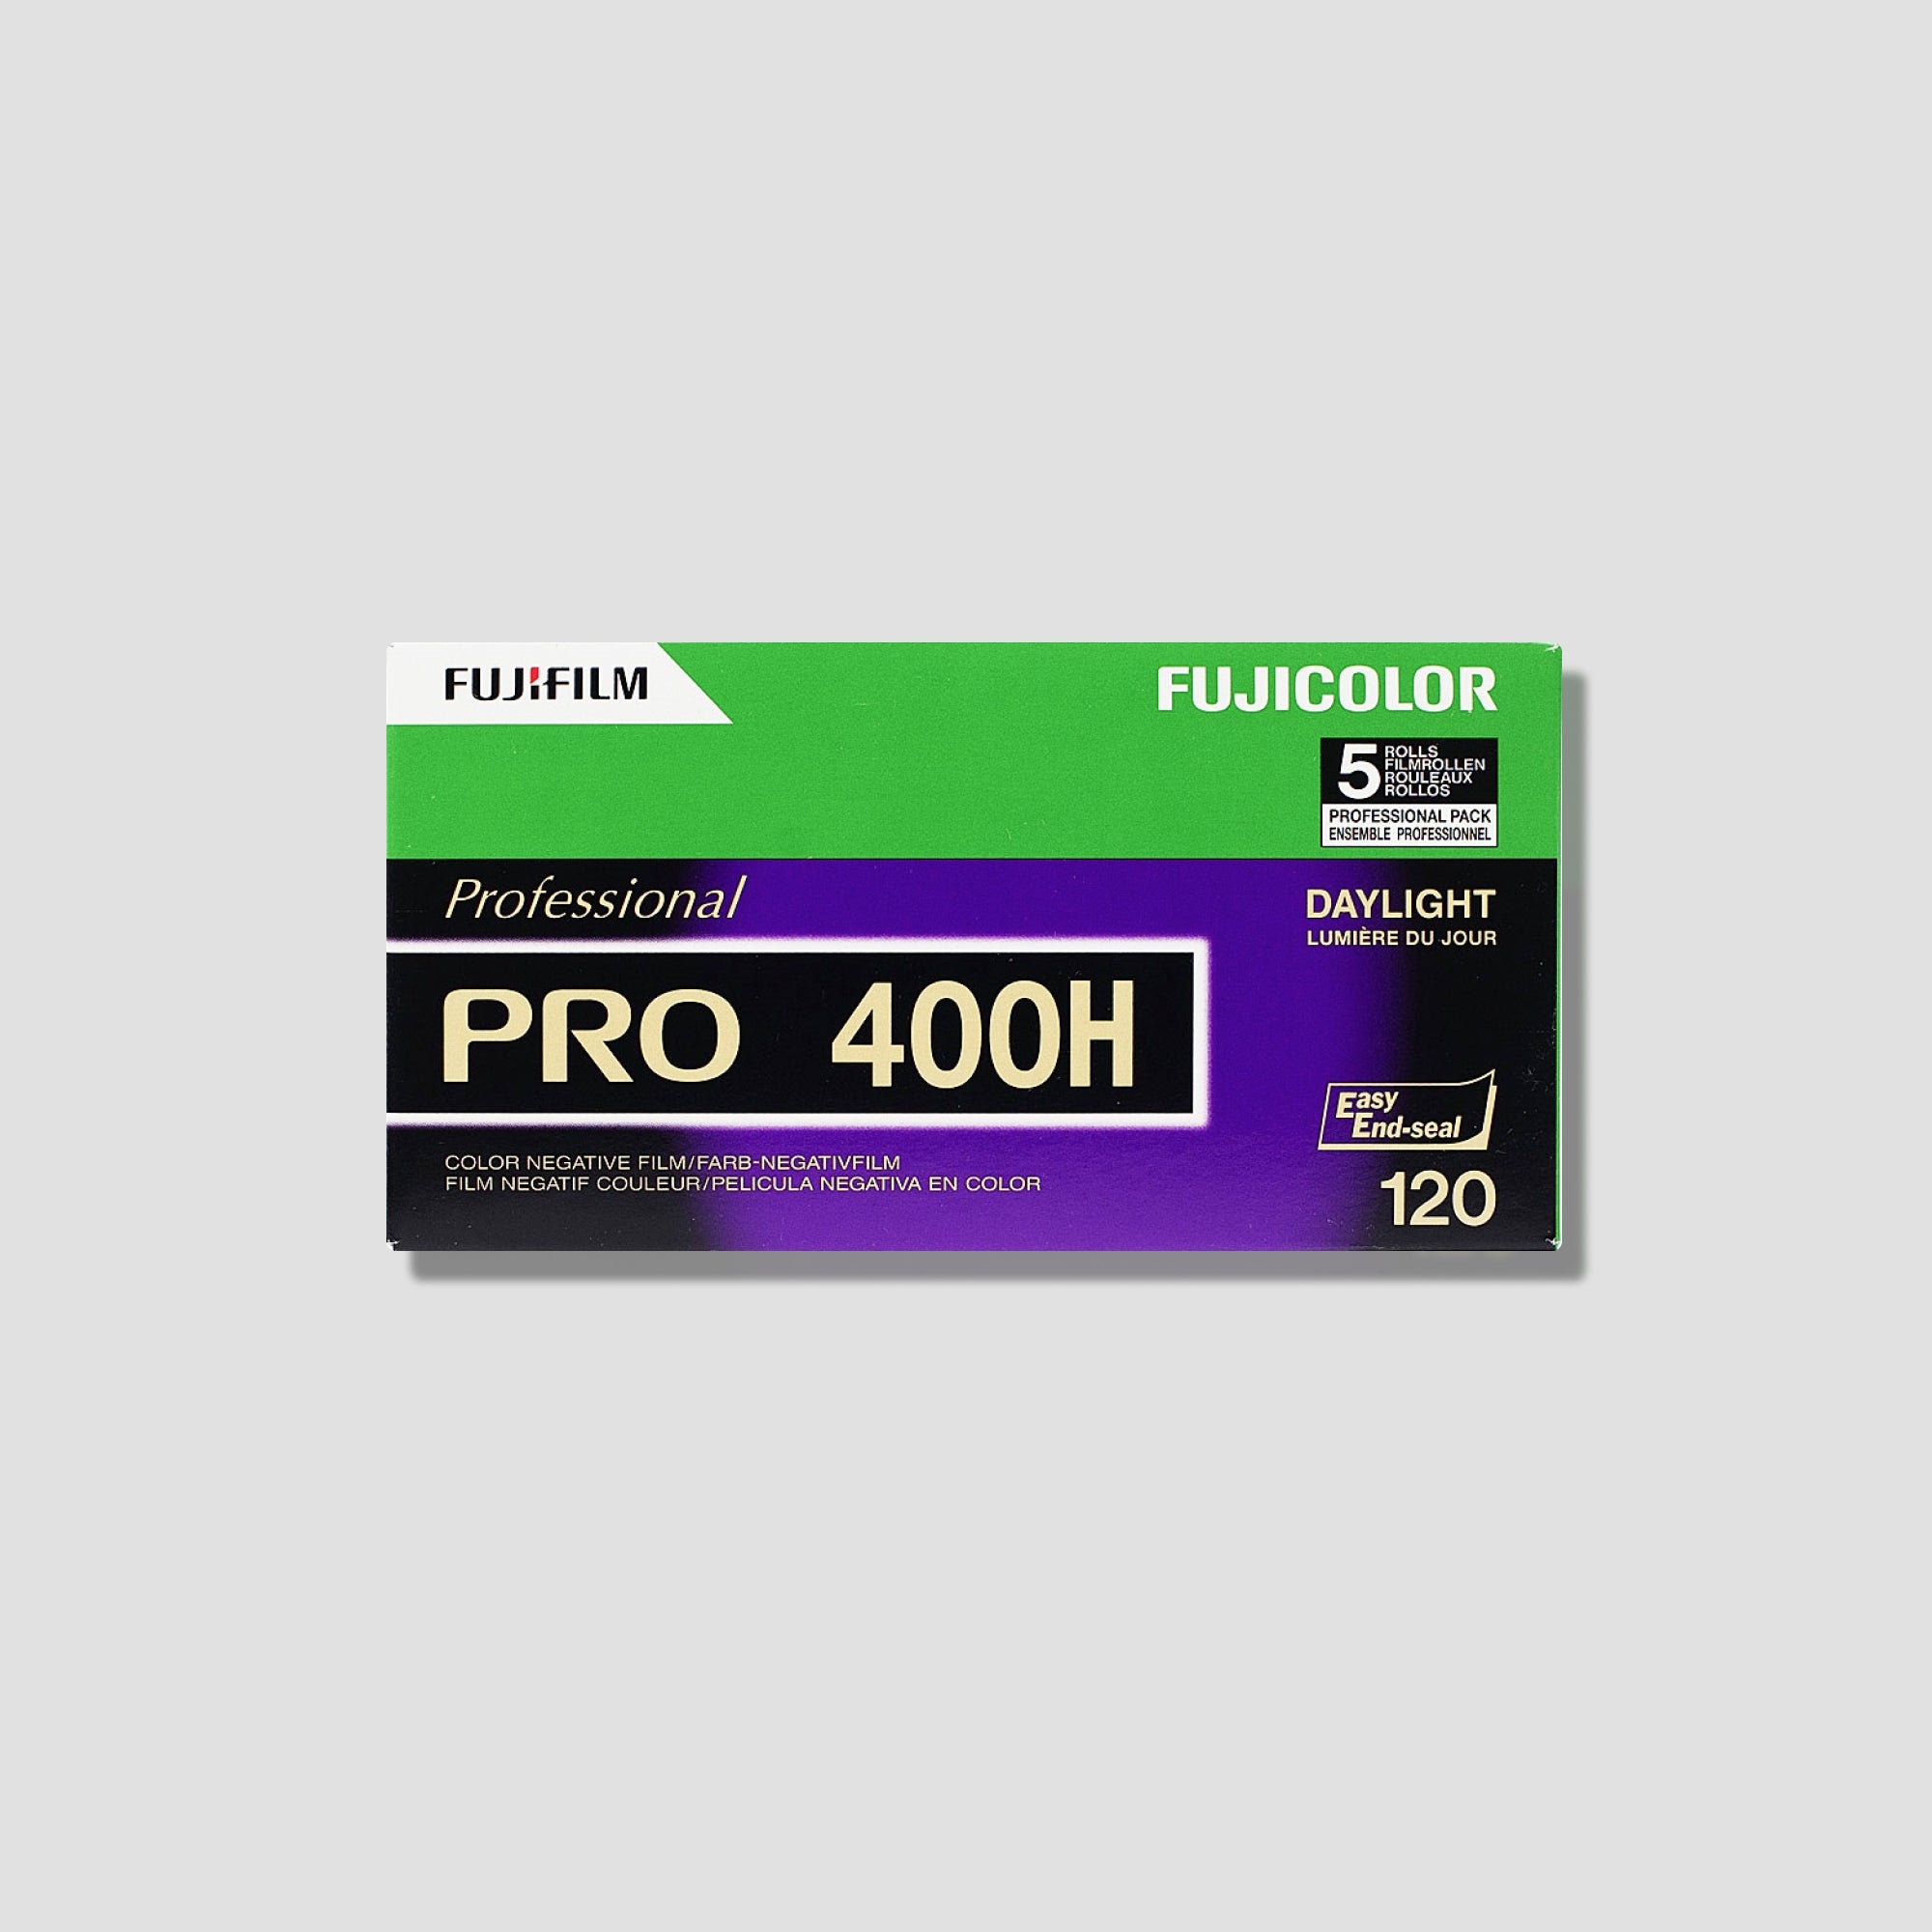 Buy Fujifilm Fujicolor Pro 400/12 now at Analogue Amsterdam